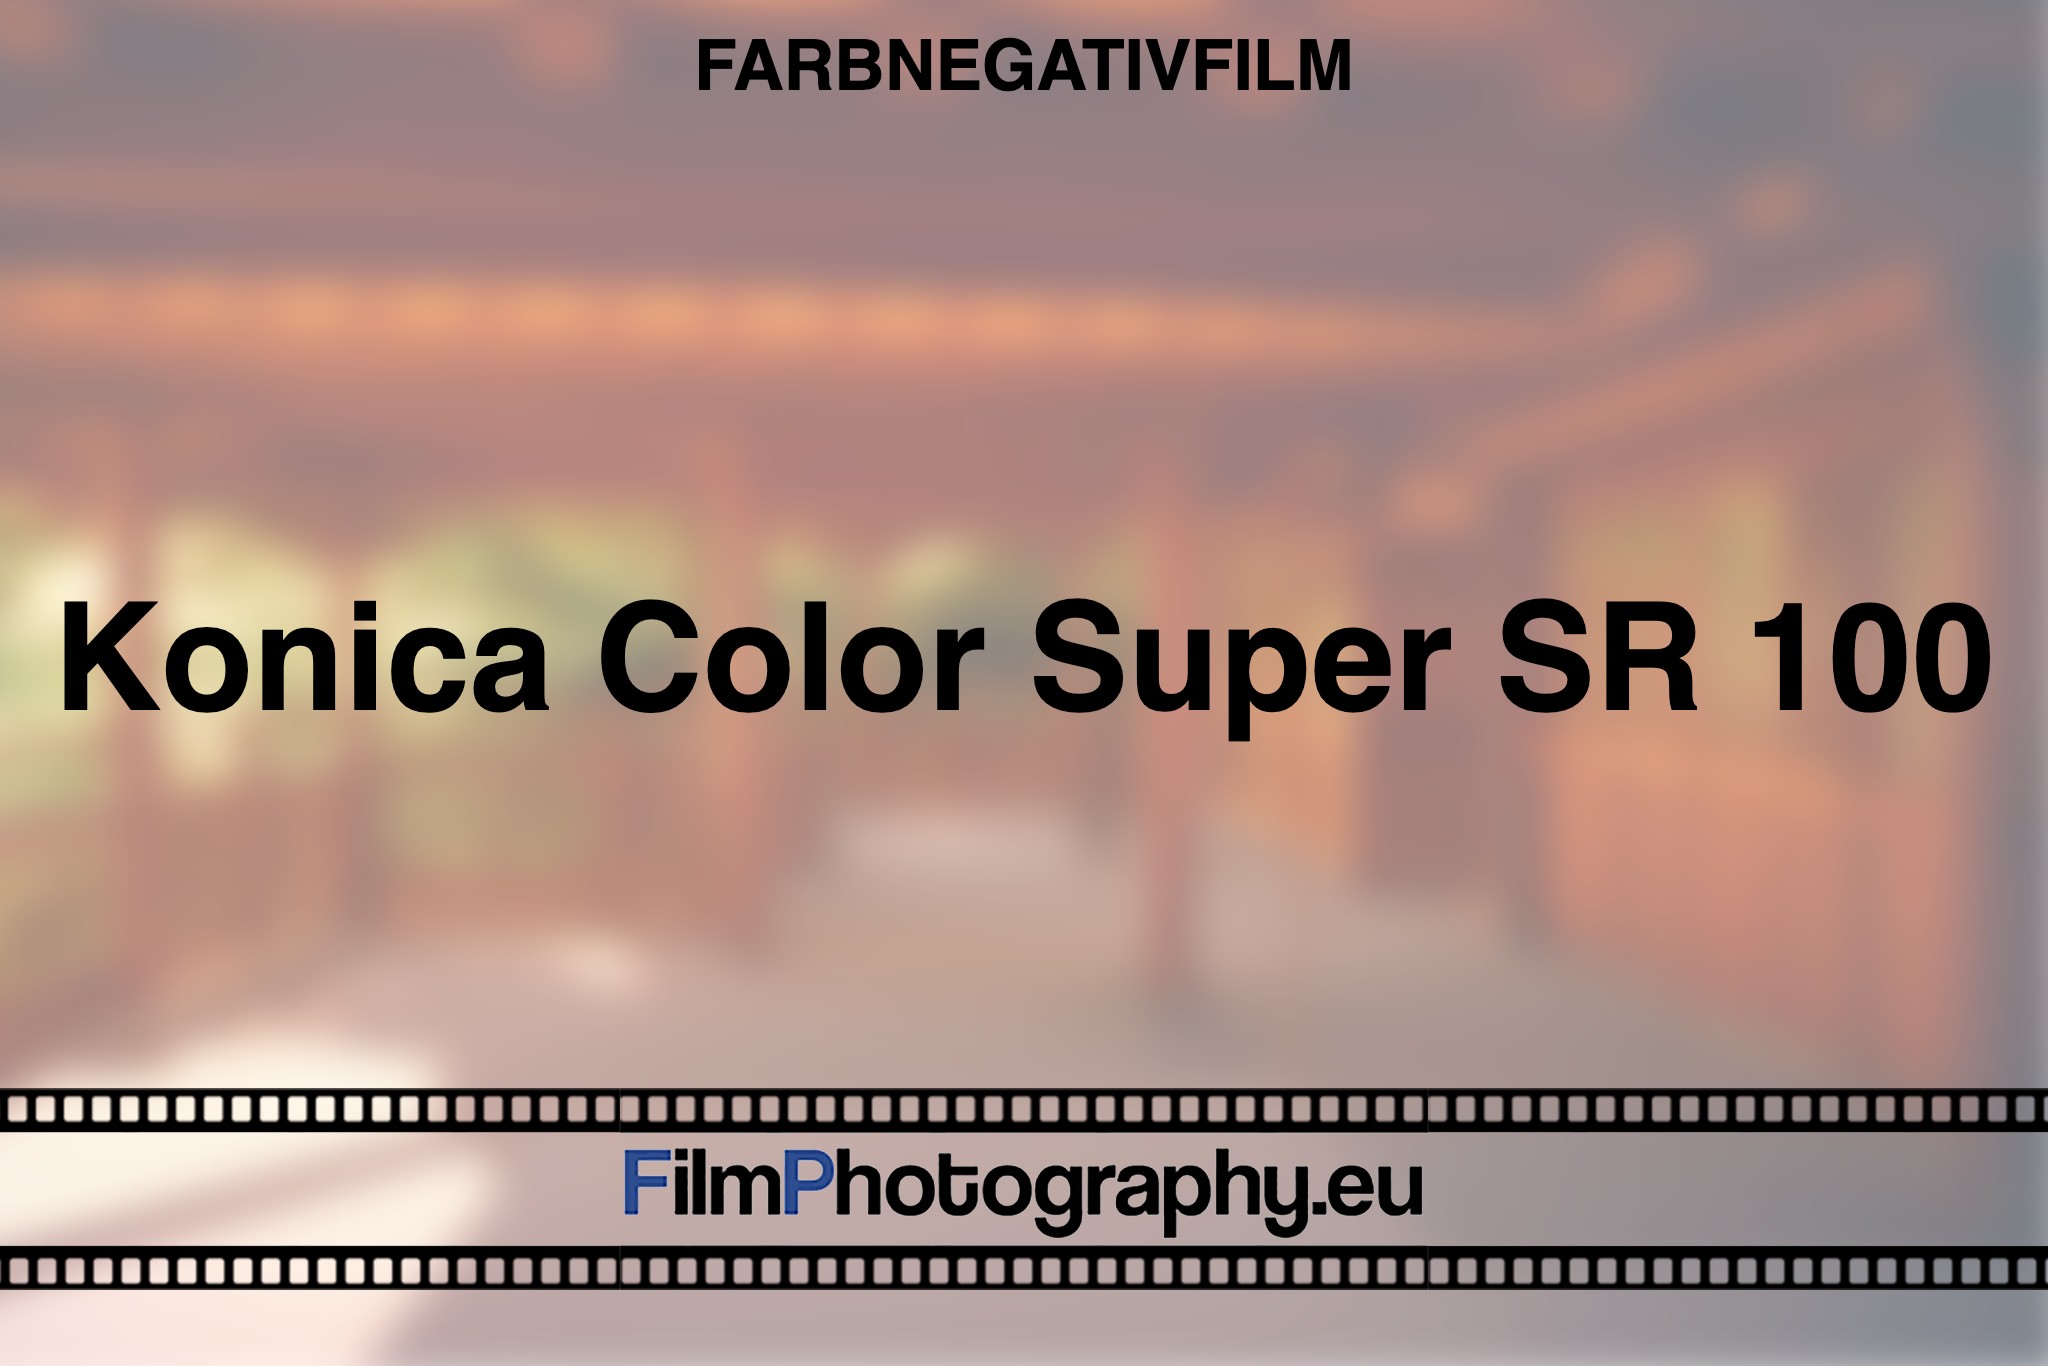 konica-color-super-sr-100-farbnegativfilm-bnv